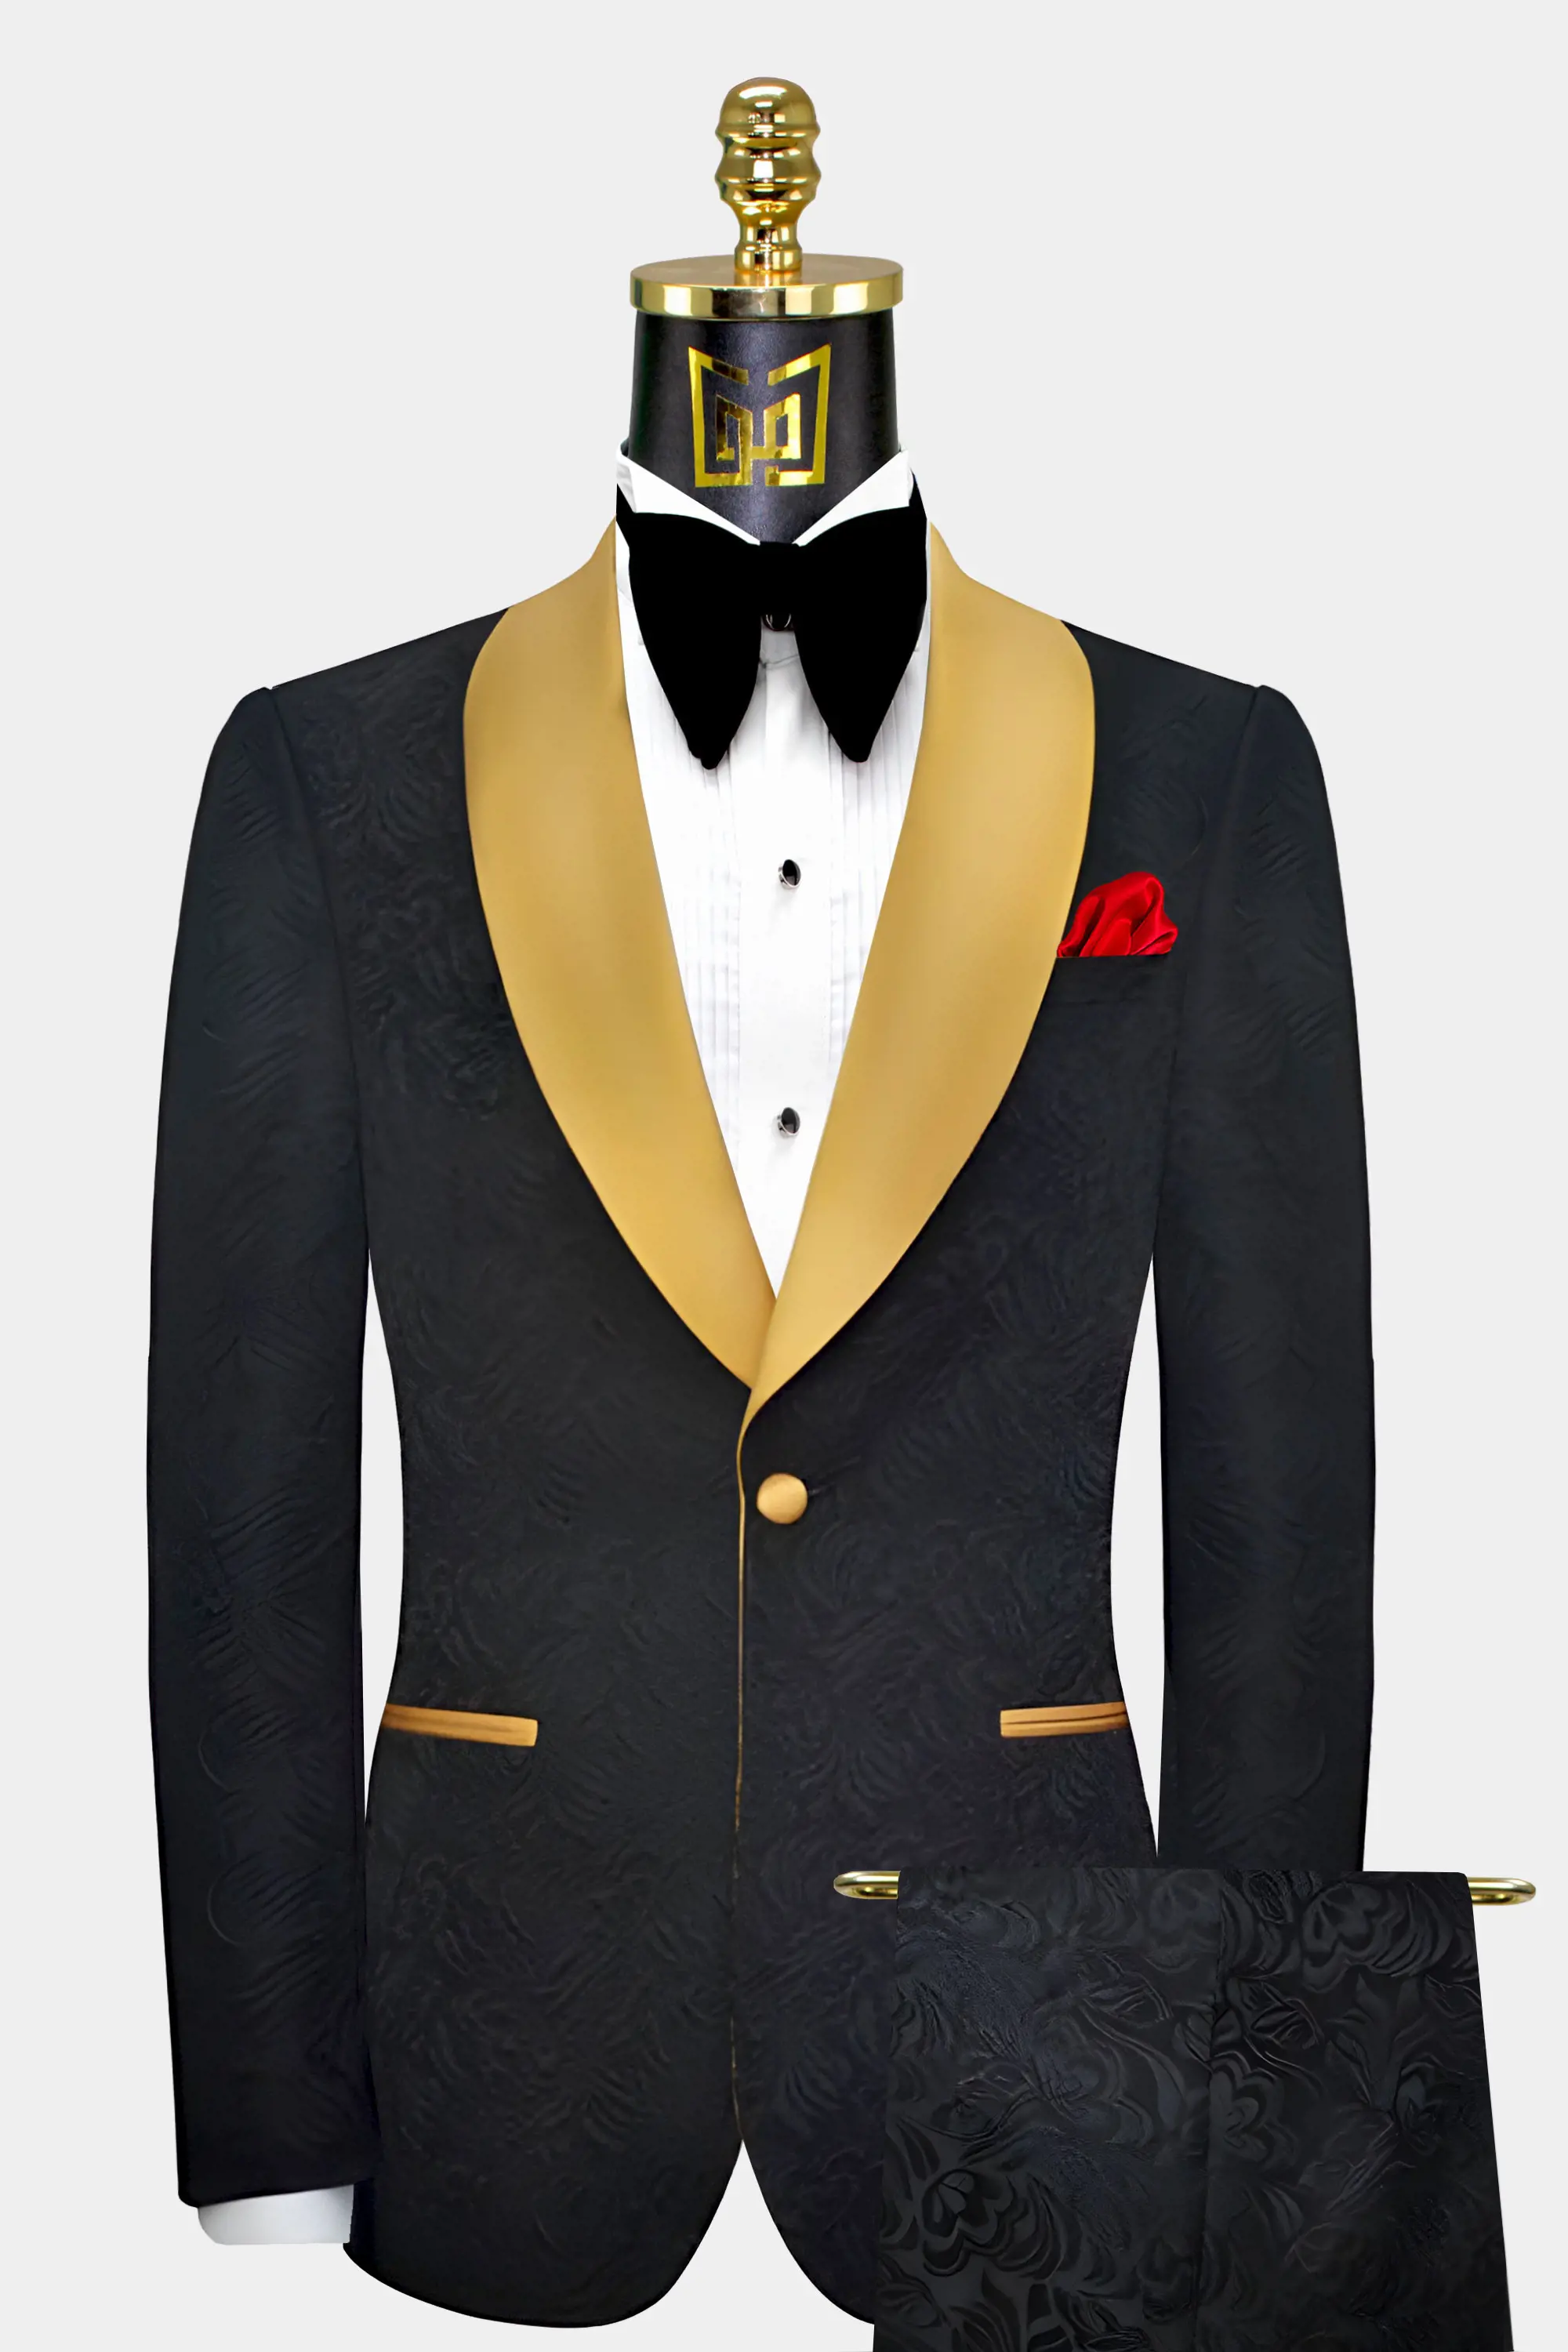 Best Tuxedo Color To Complement A Gold Bridesmaid Dress | ShunVogue